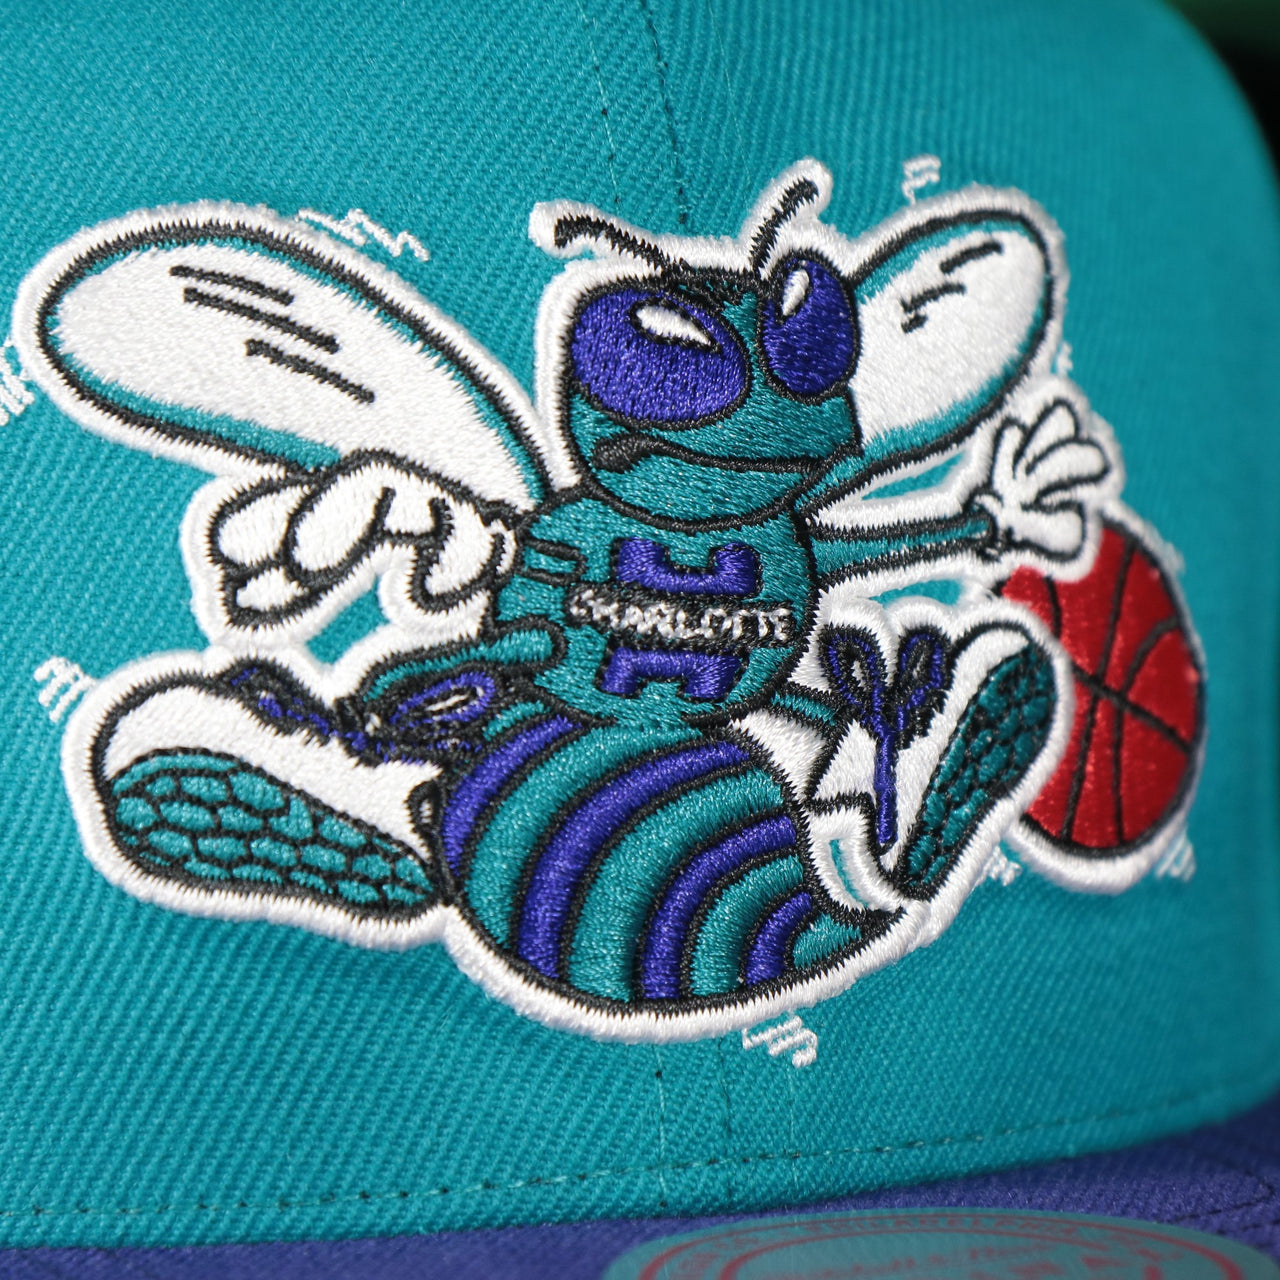 Charlotte Hornets NBA Team 2 Tone 2.0 Green bottom | Teal/Purple Snapback Hat